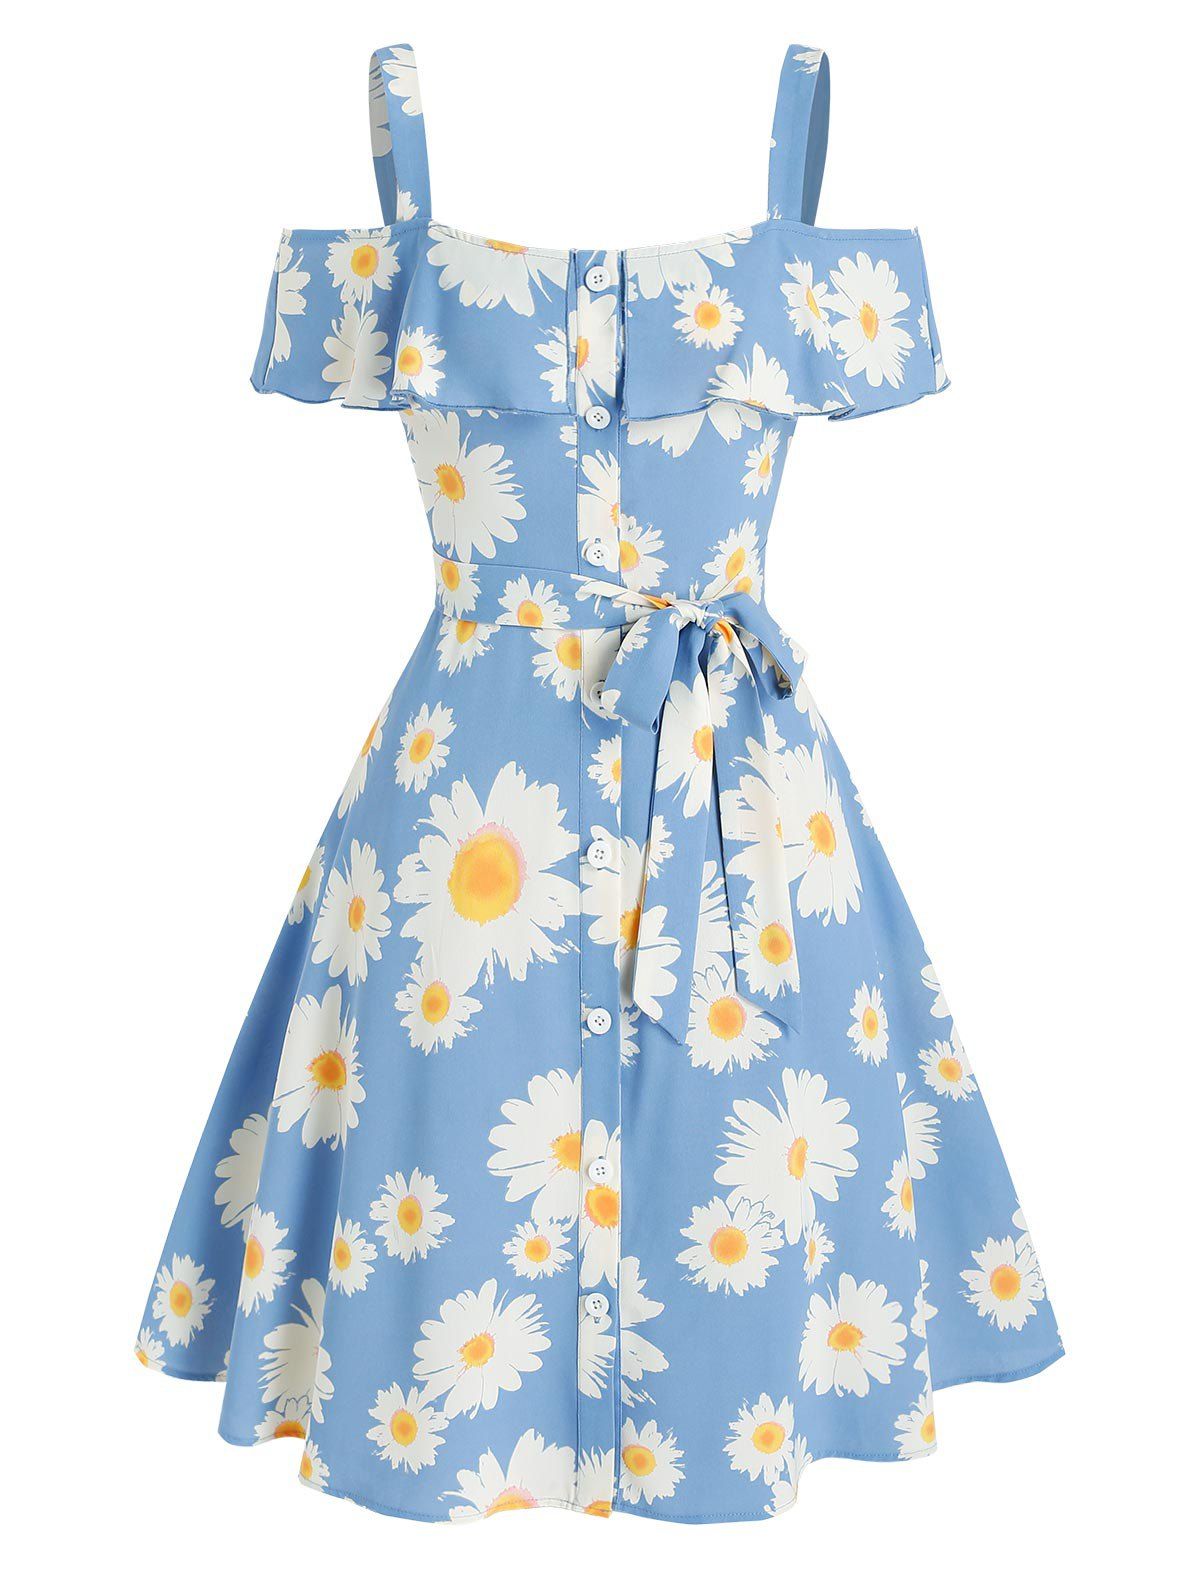 Daisy Print Cold Shoulder Ruffled Dress - LIGHT BLUE XL